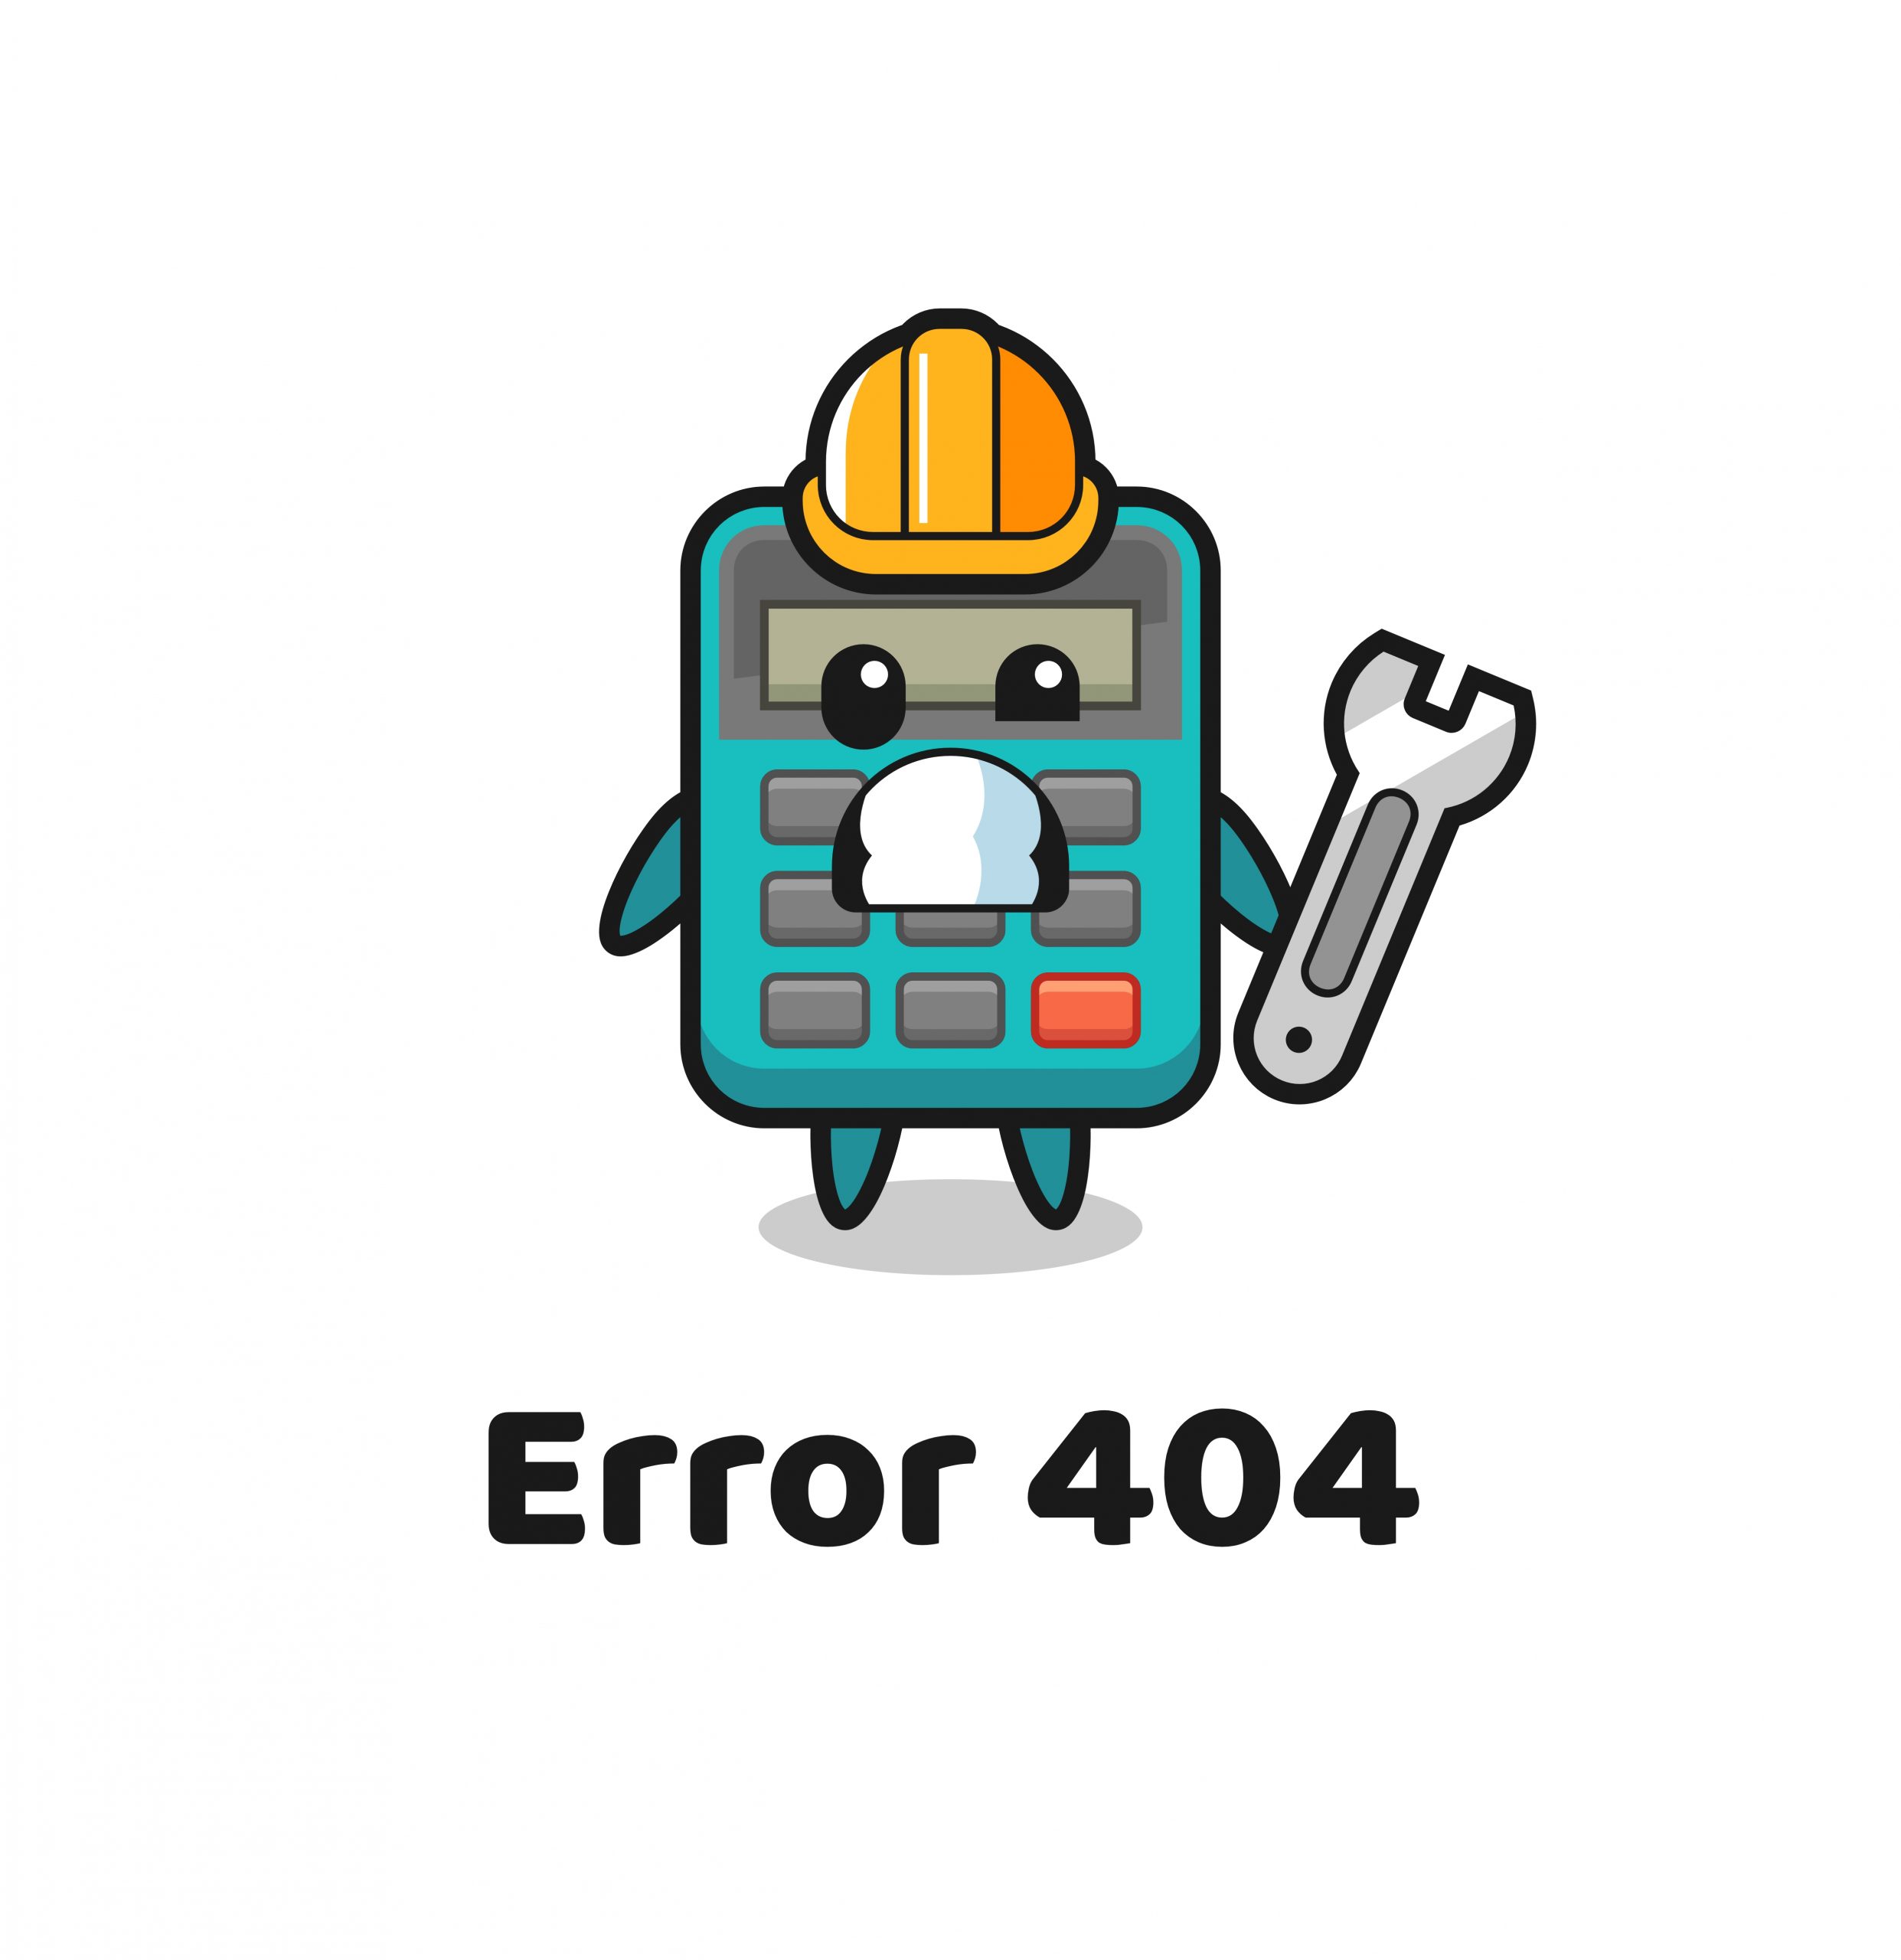 error 404 with the cute calculator mascot